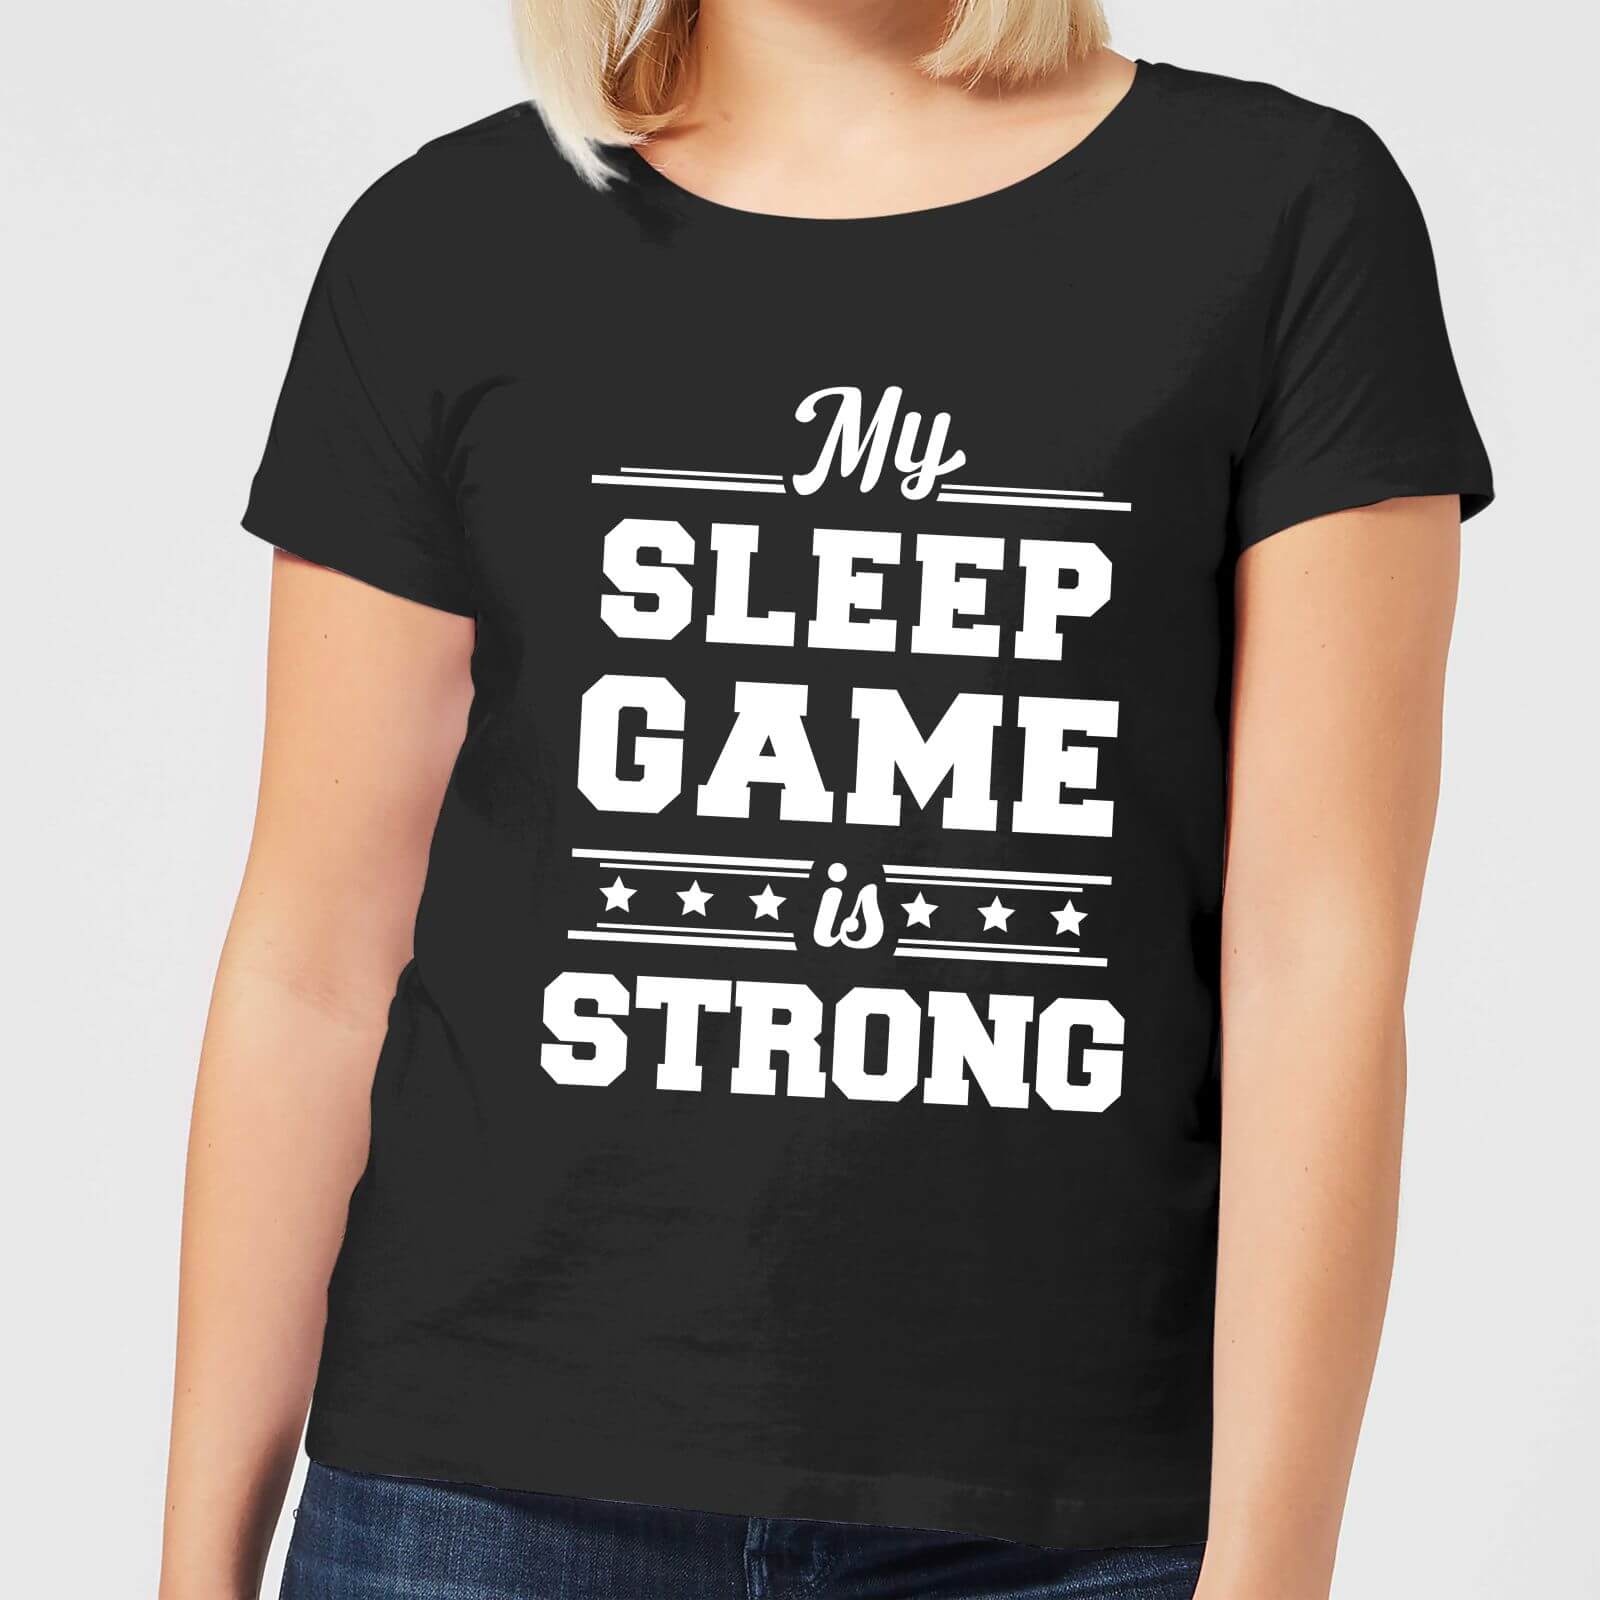 My Sleep Game is Strong Women's T-Shirt - Black - 3XL - Black